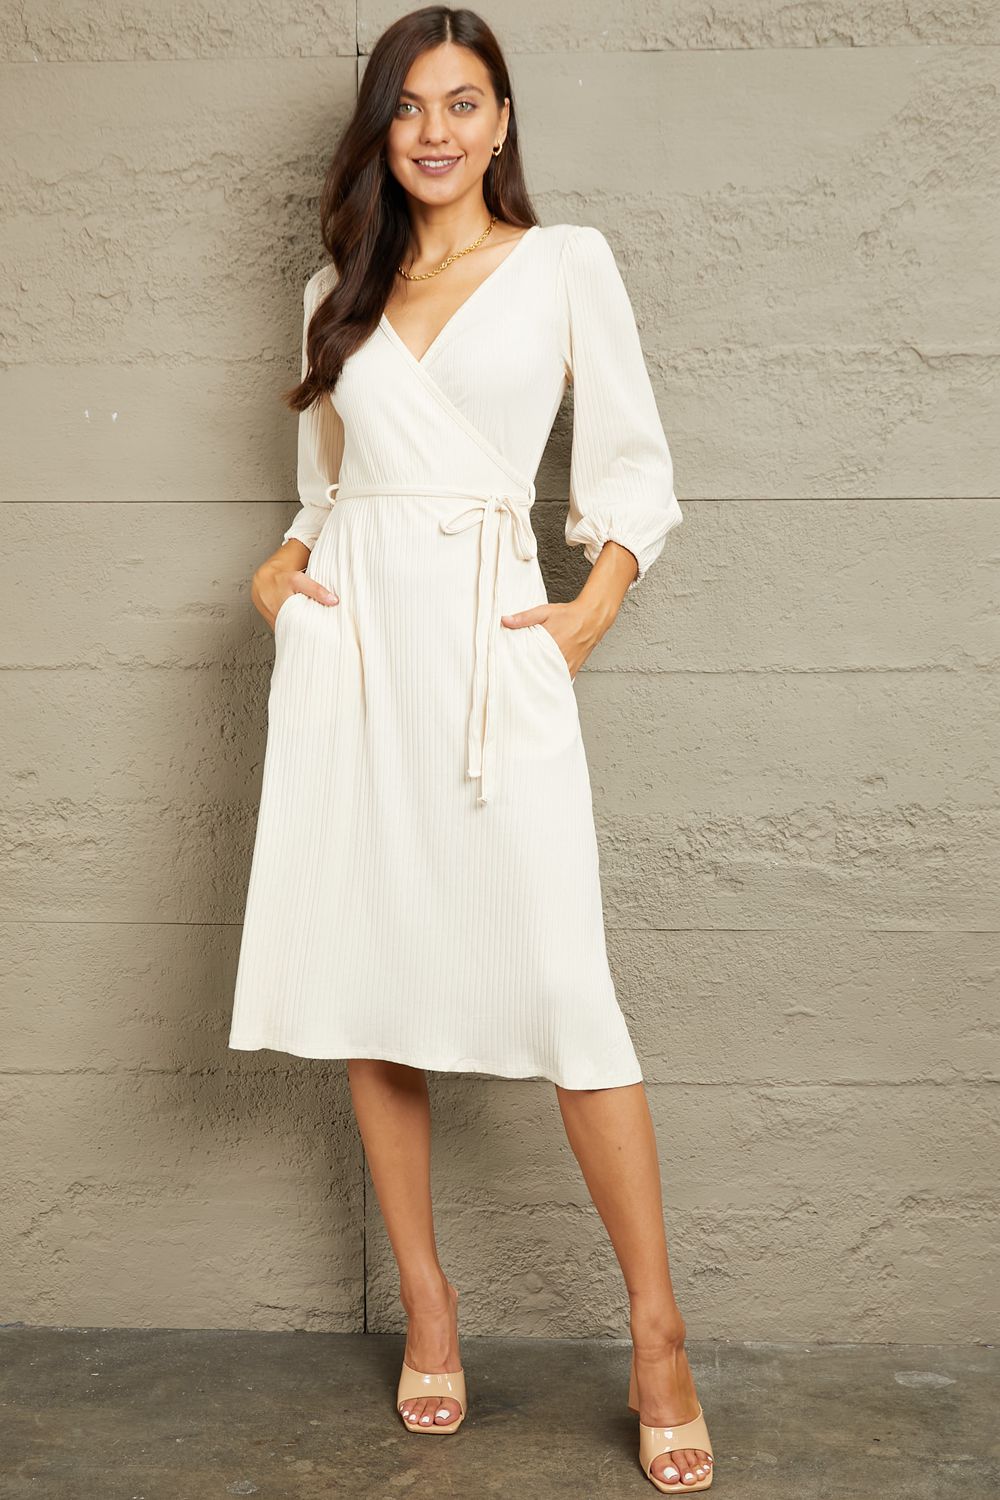 No Way Around It Surplice Flare Ruching Dress-Ivory Ivory Wrap Style Knee Length Dress by Vim&Vigor | Vim&Vigor Boutique